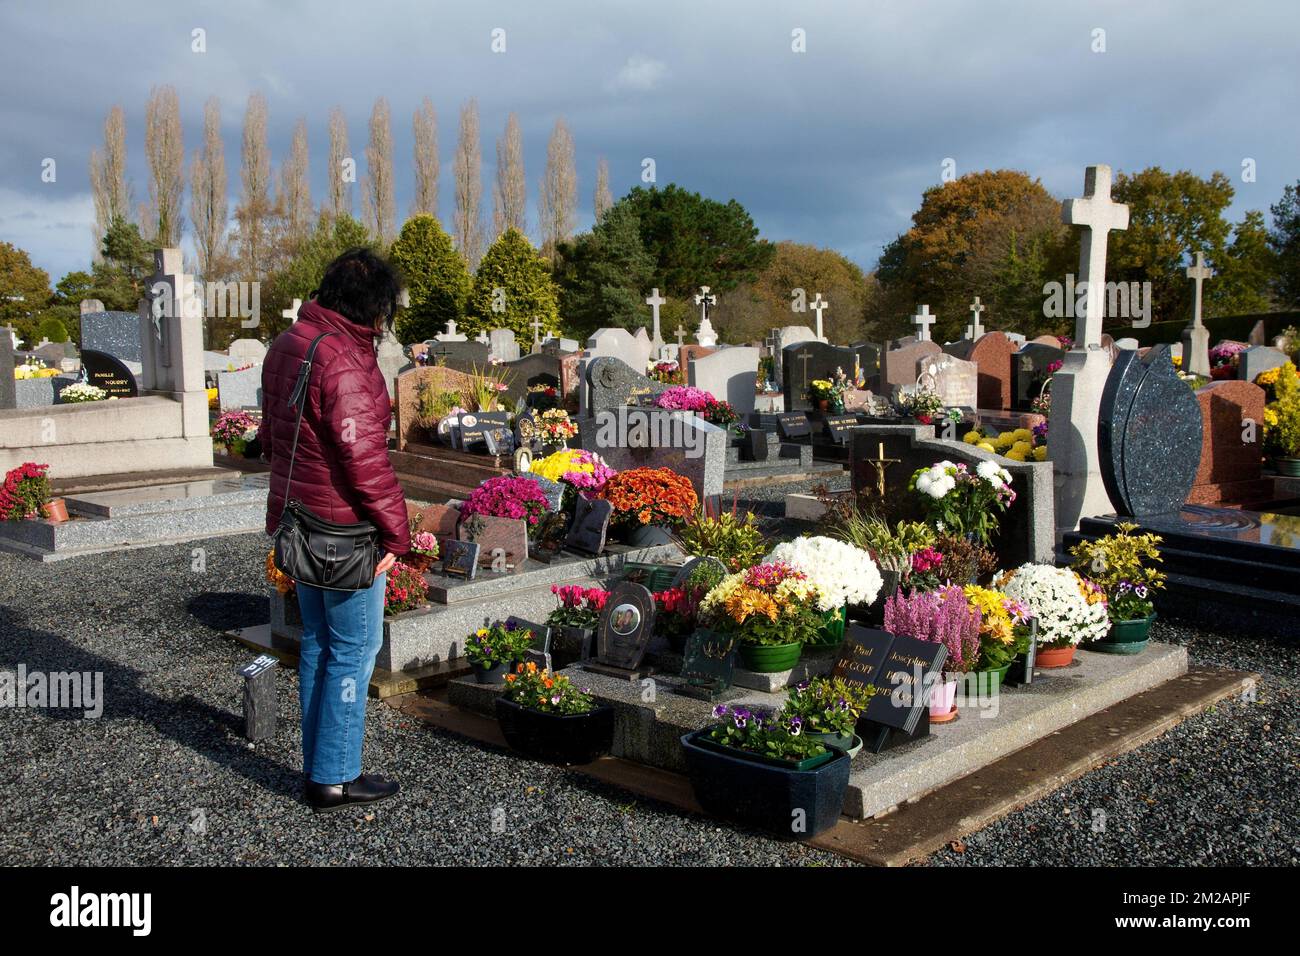 Cimitero e fiori | Cimetière et fleurs 05/11/2017 Foto Stock